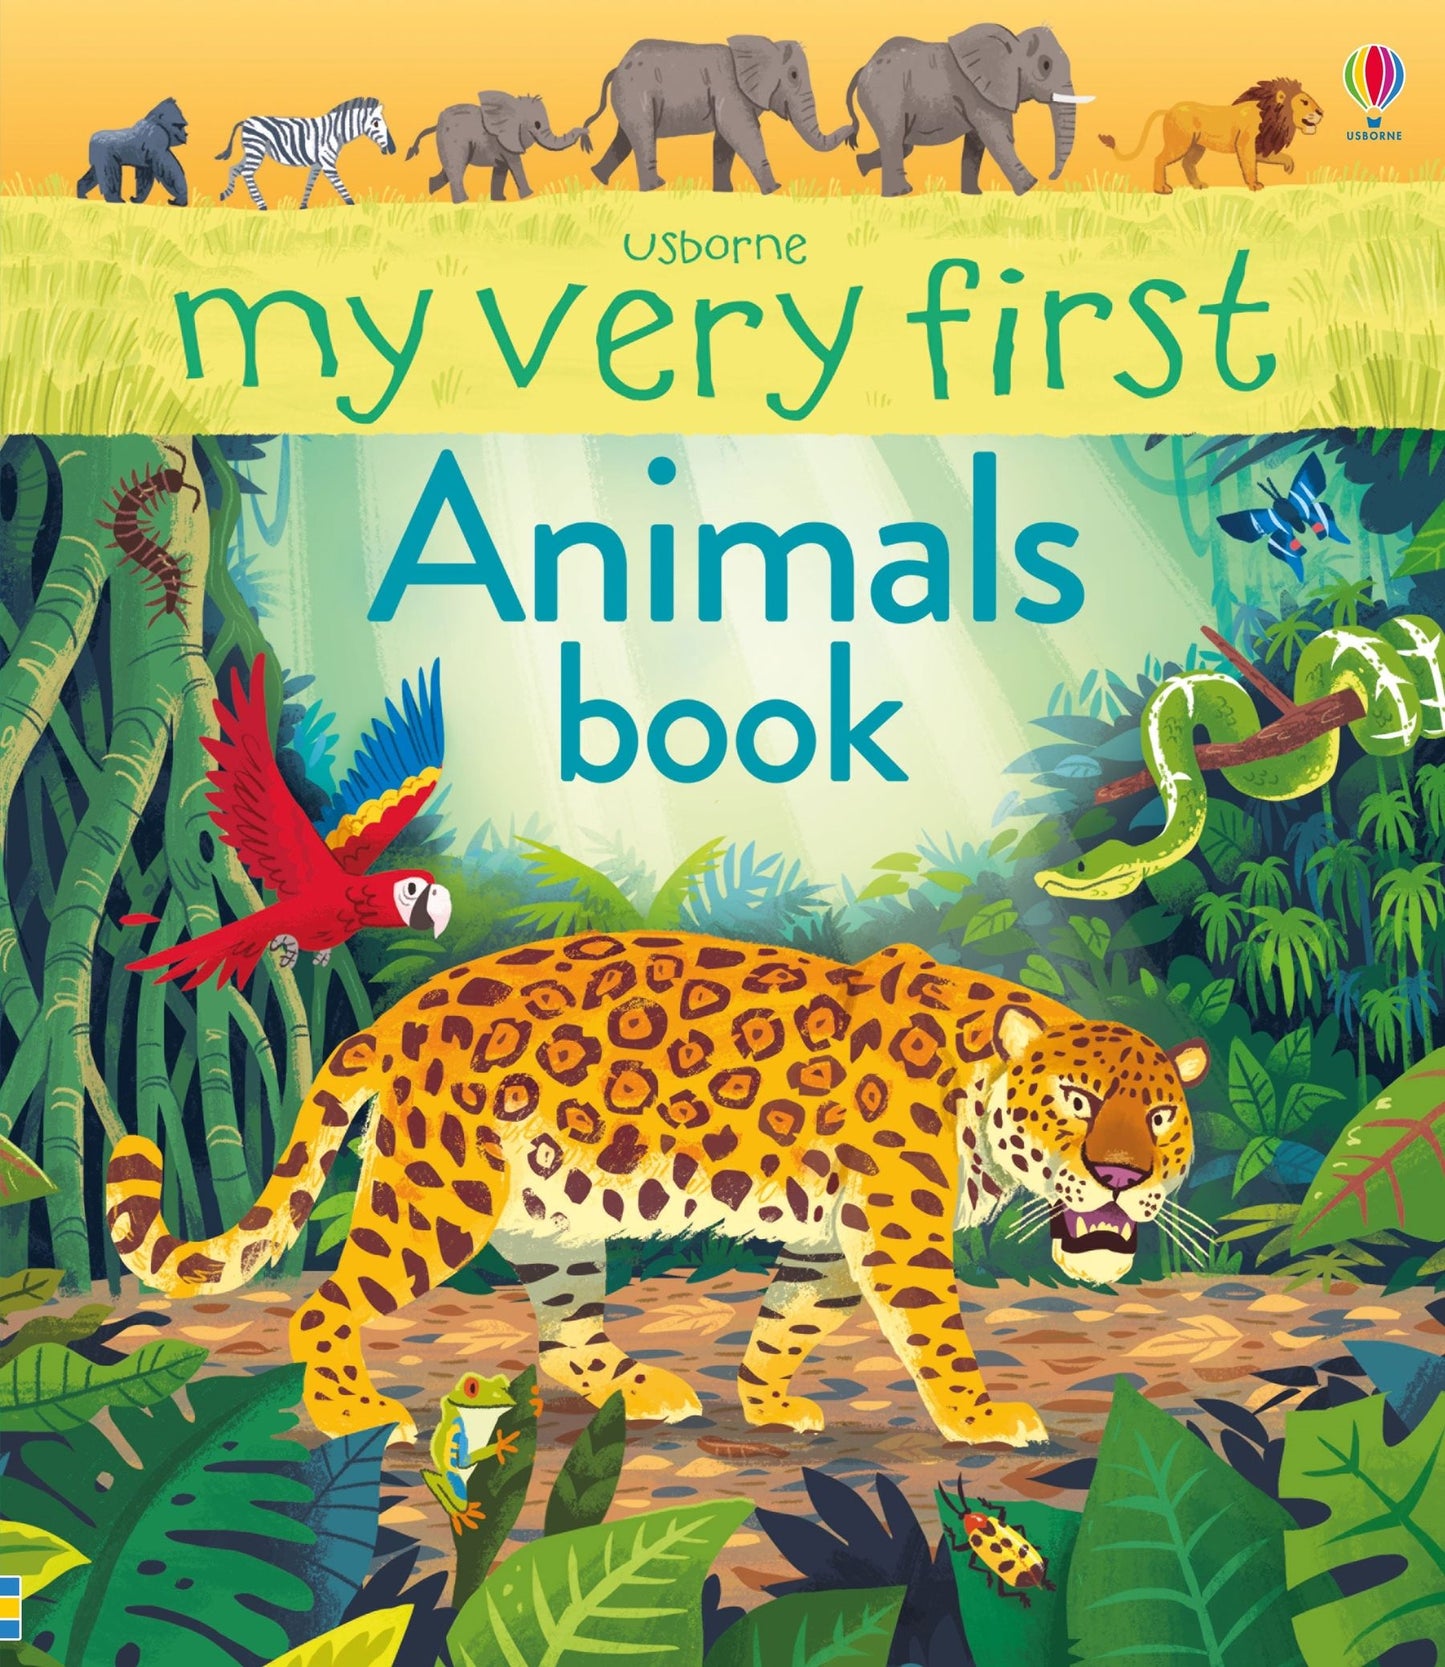 Usborne Books - My Very First Animals Book